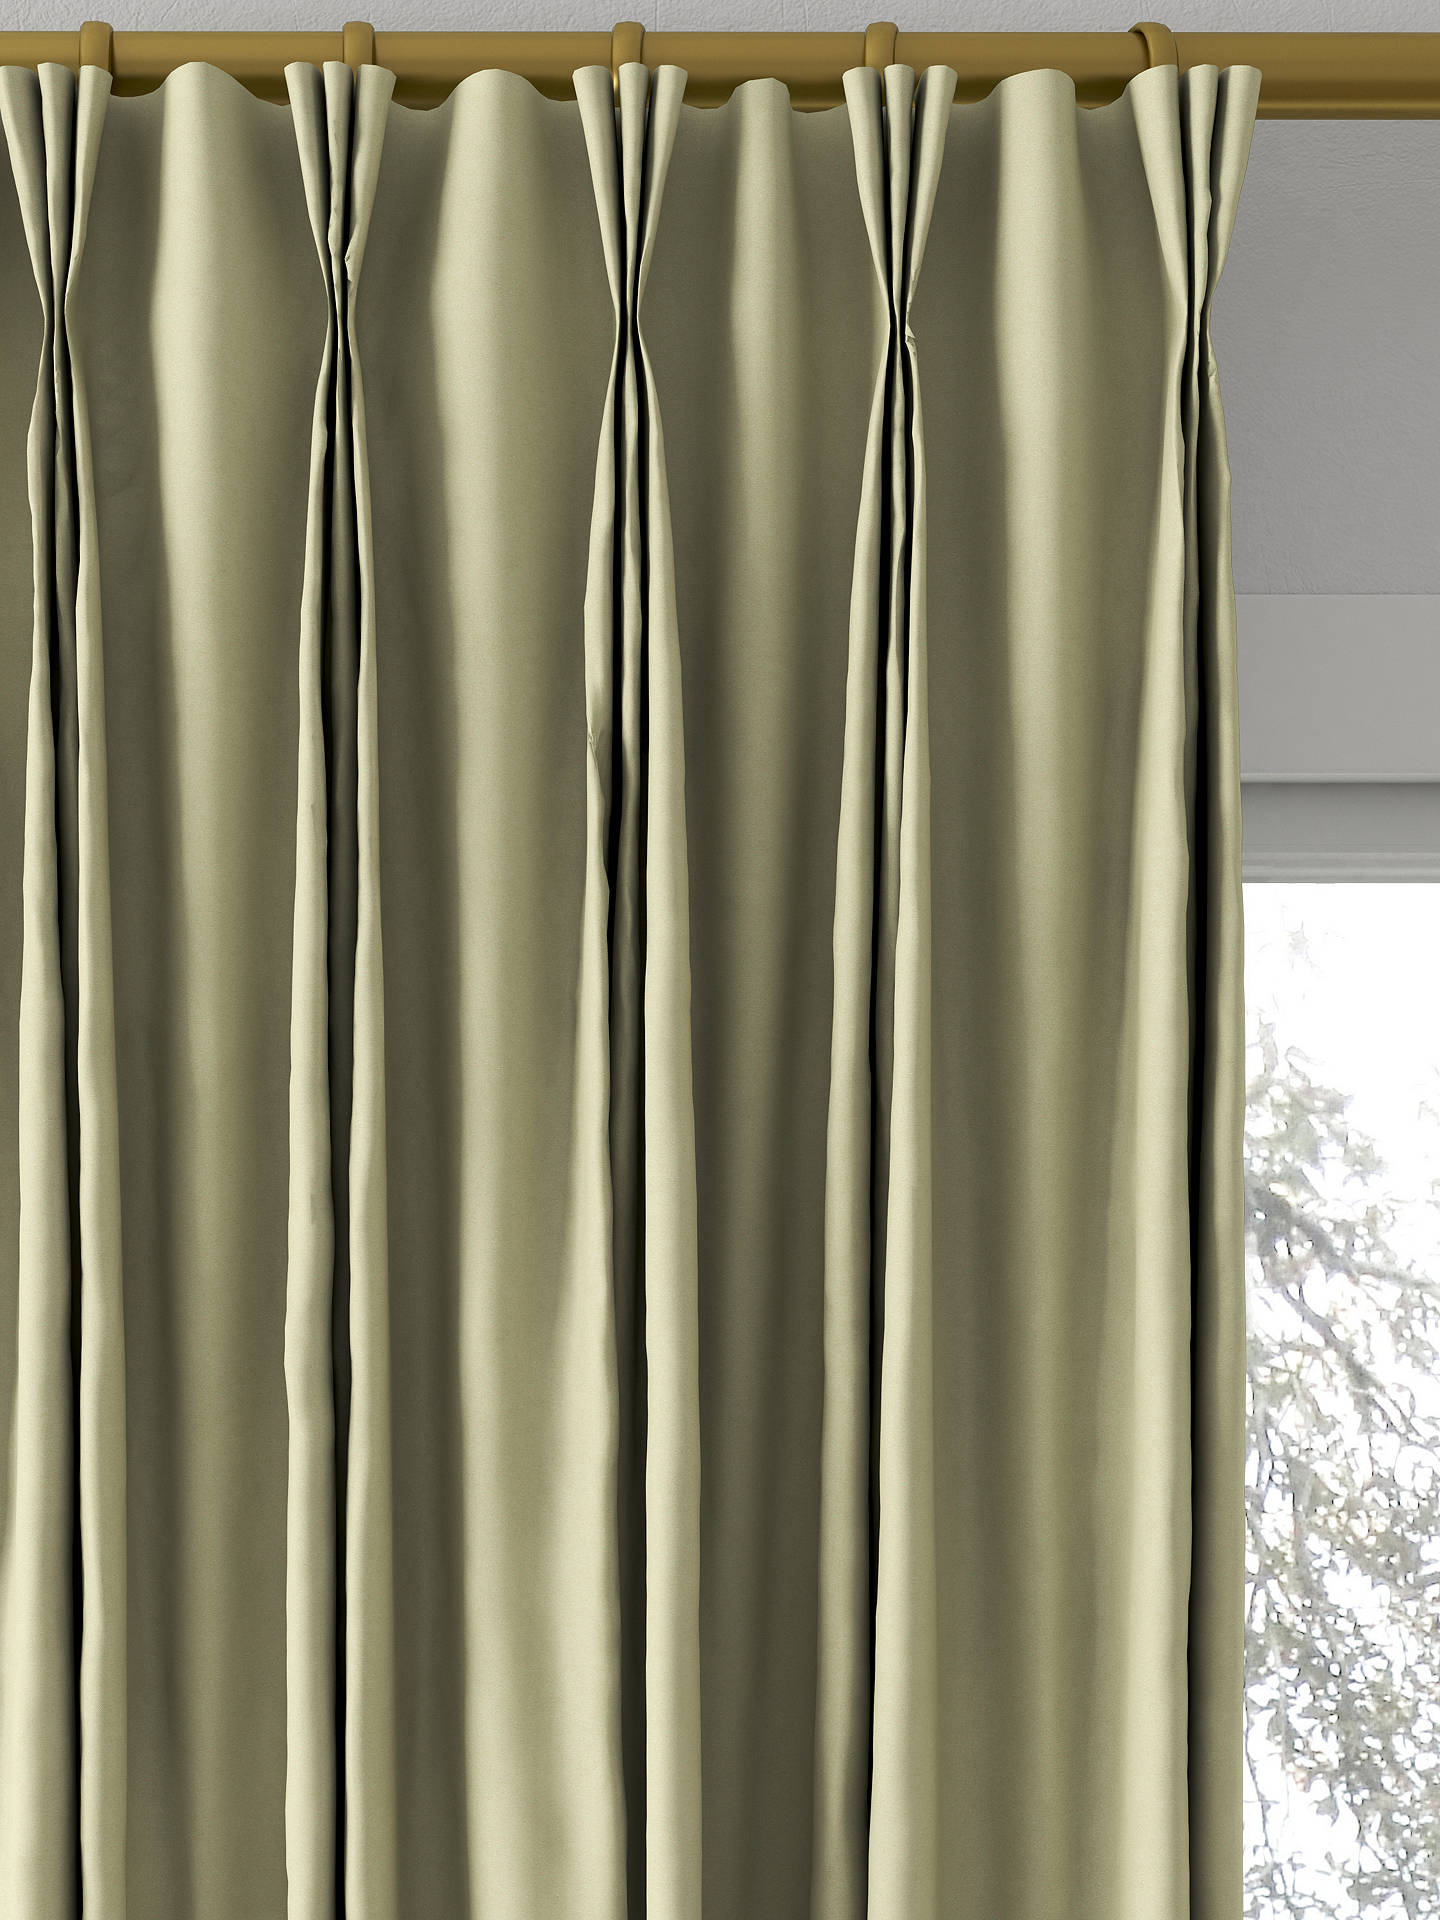 Harlequin Empower Plain Made to Measure Curtains, Shiitake